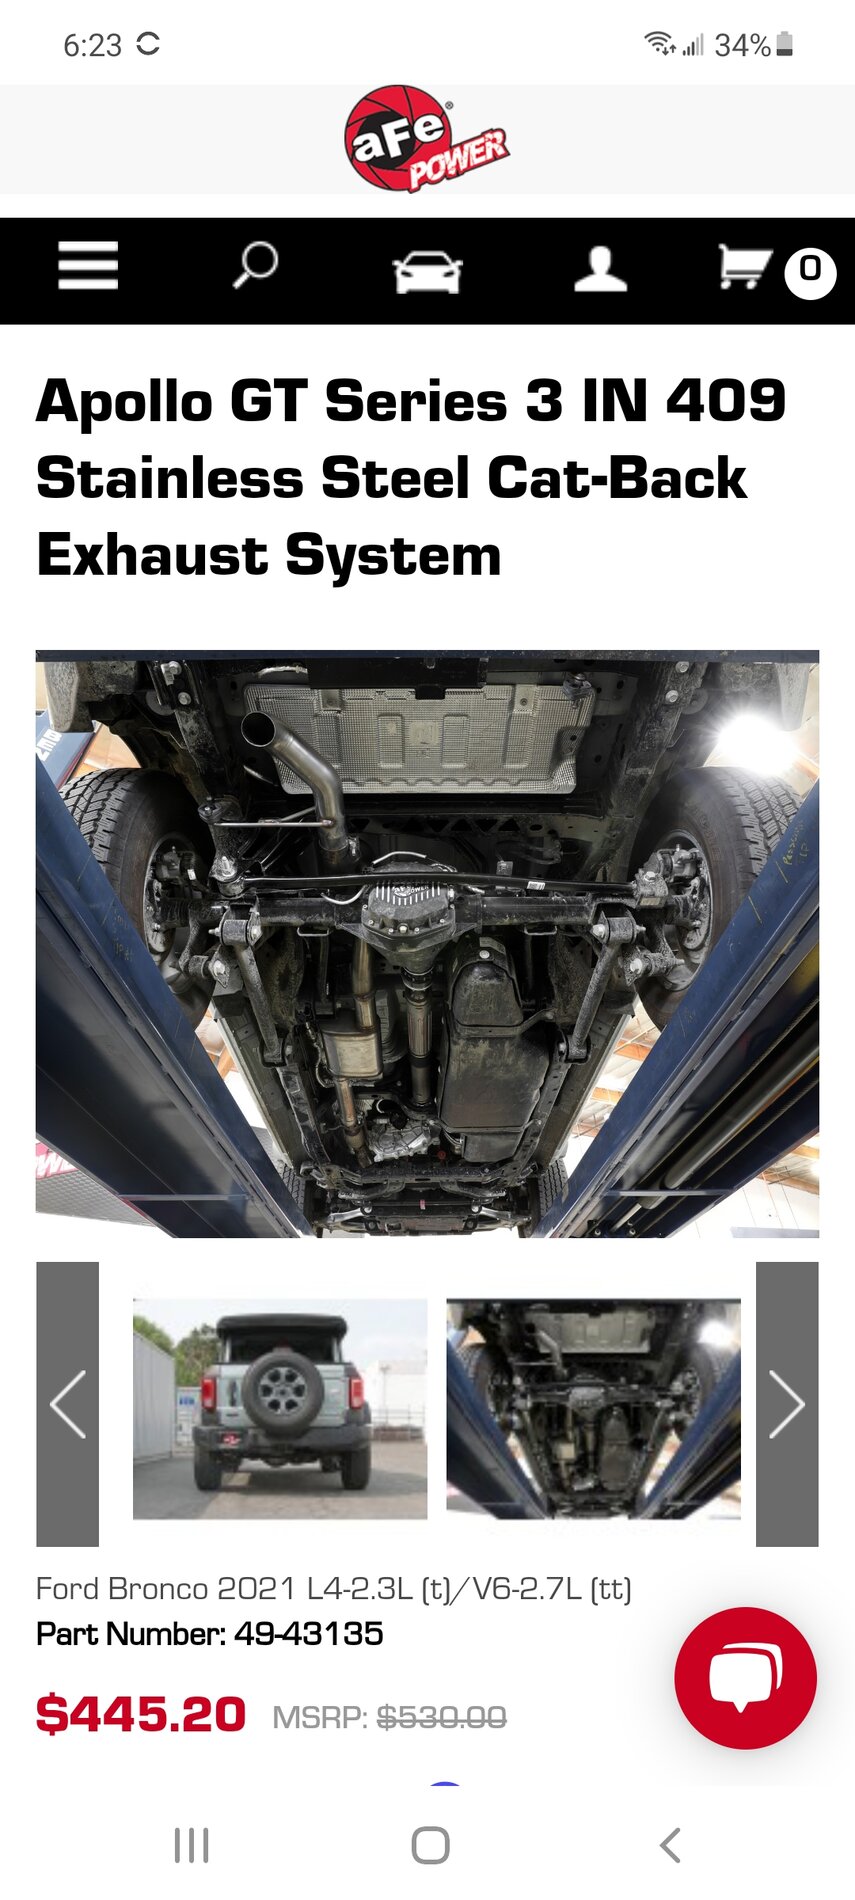 Ford Bronco AFE Power exhaust system for 2.3L Bronco Screenshot_20211117-182358_Samsung Internet